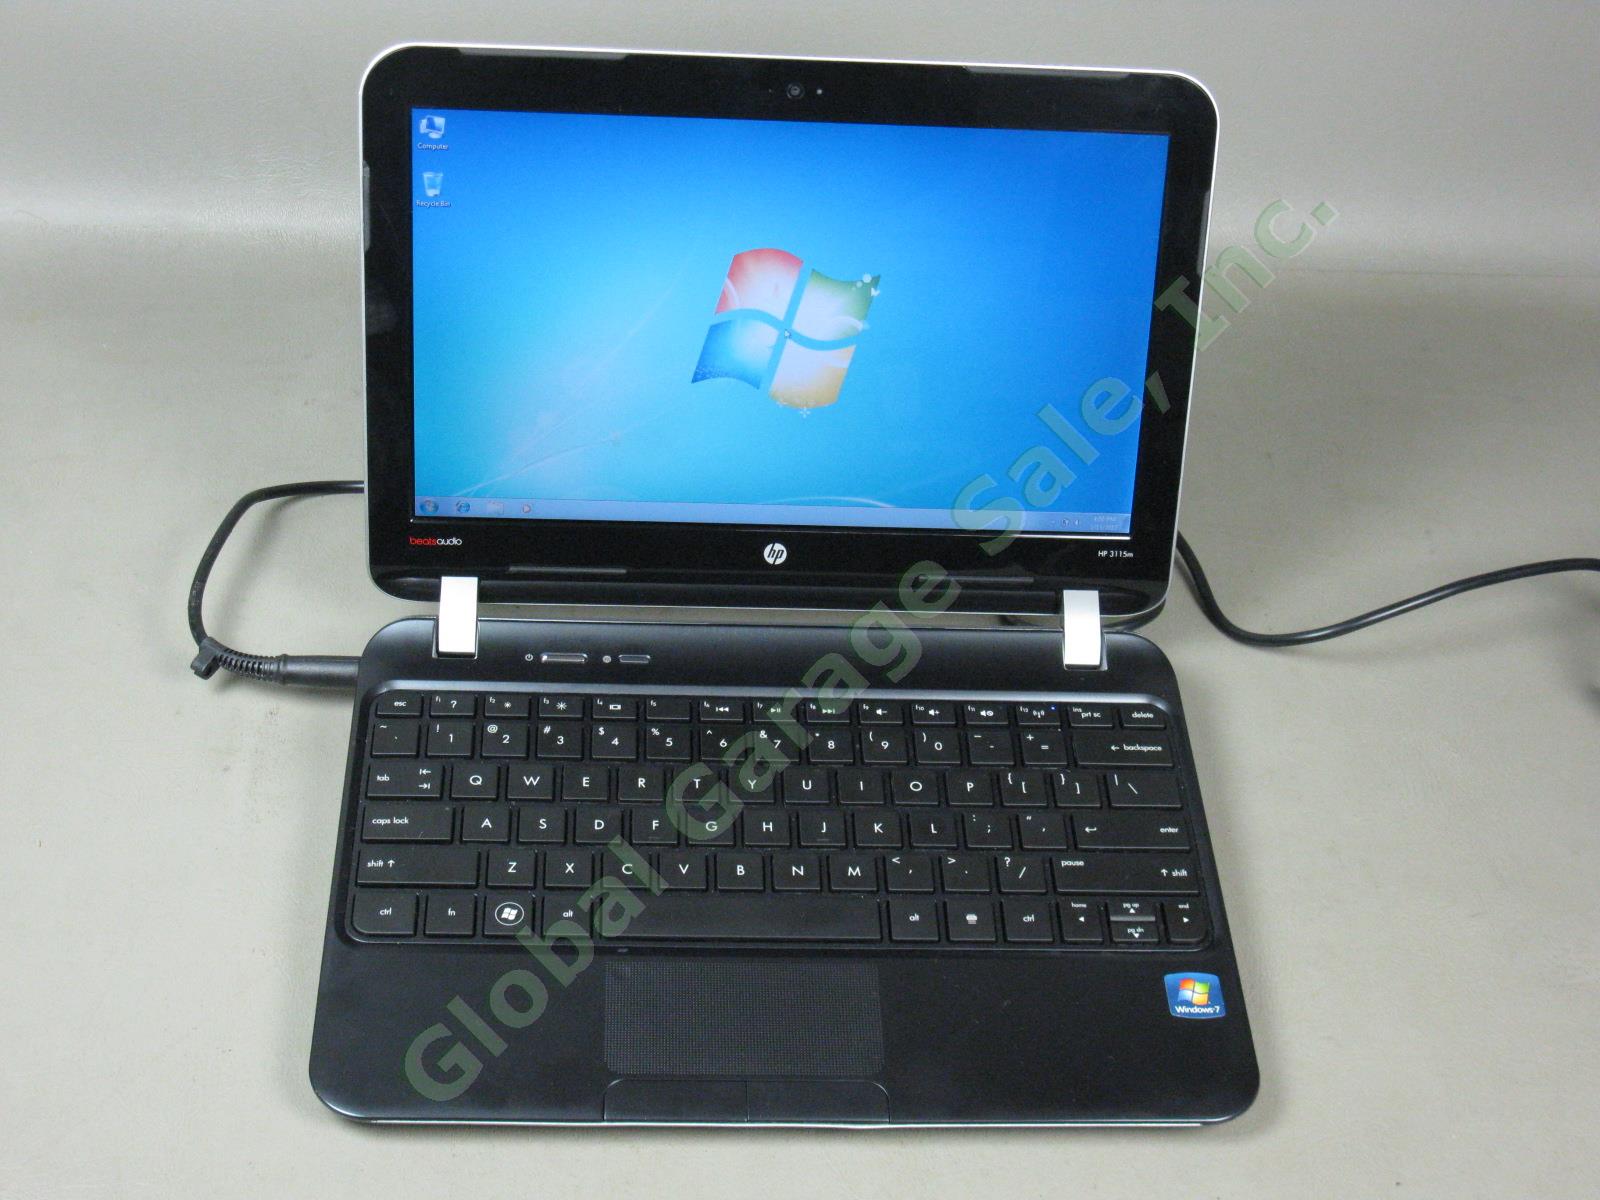 HP 3115m 11.6" Notebook Laptop Computer 1.65GHz 4GB 320GB Windows 7 Beats Audio